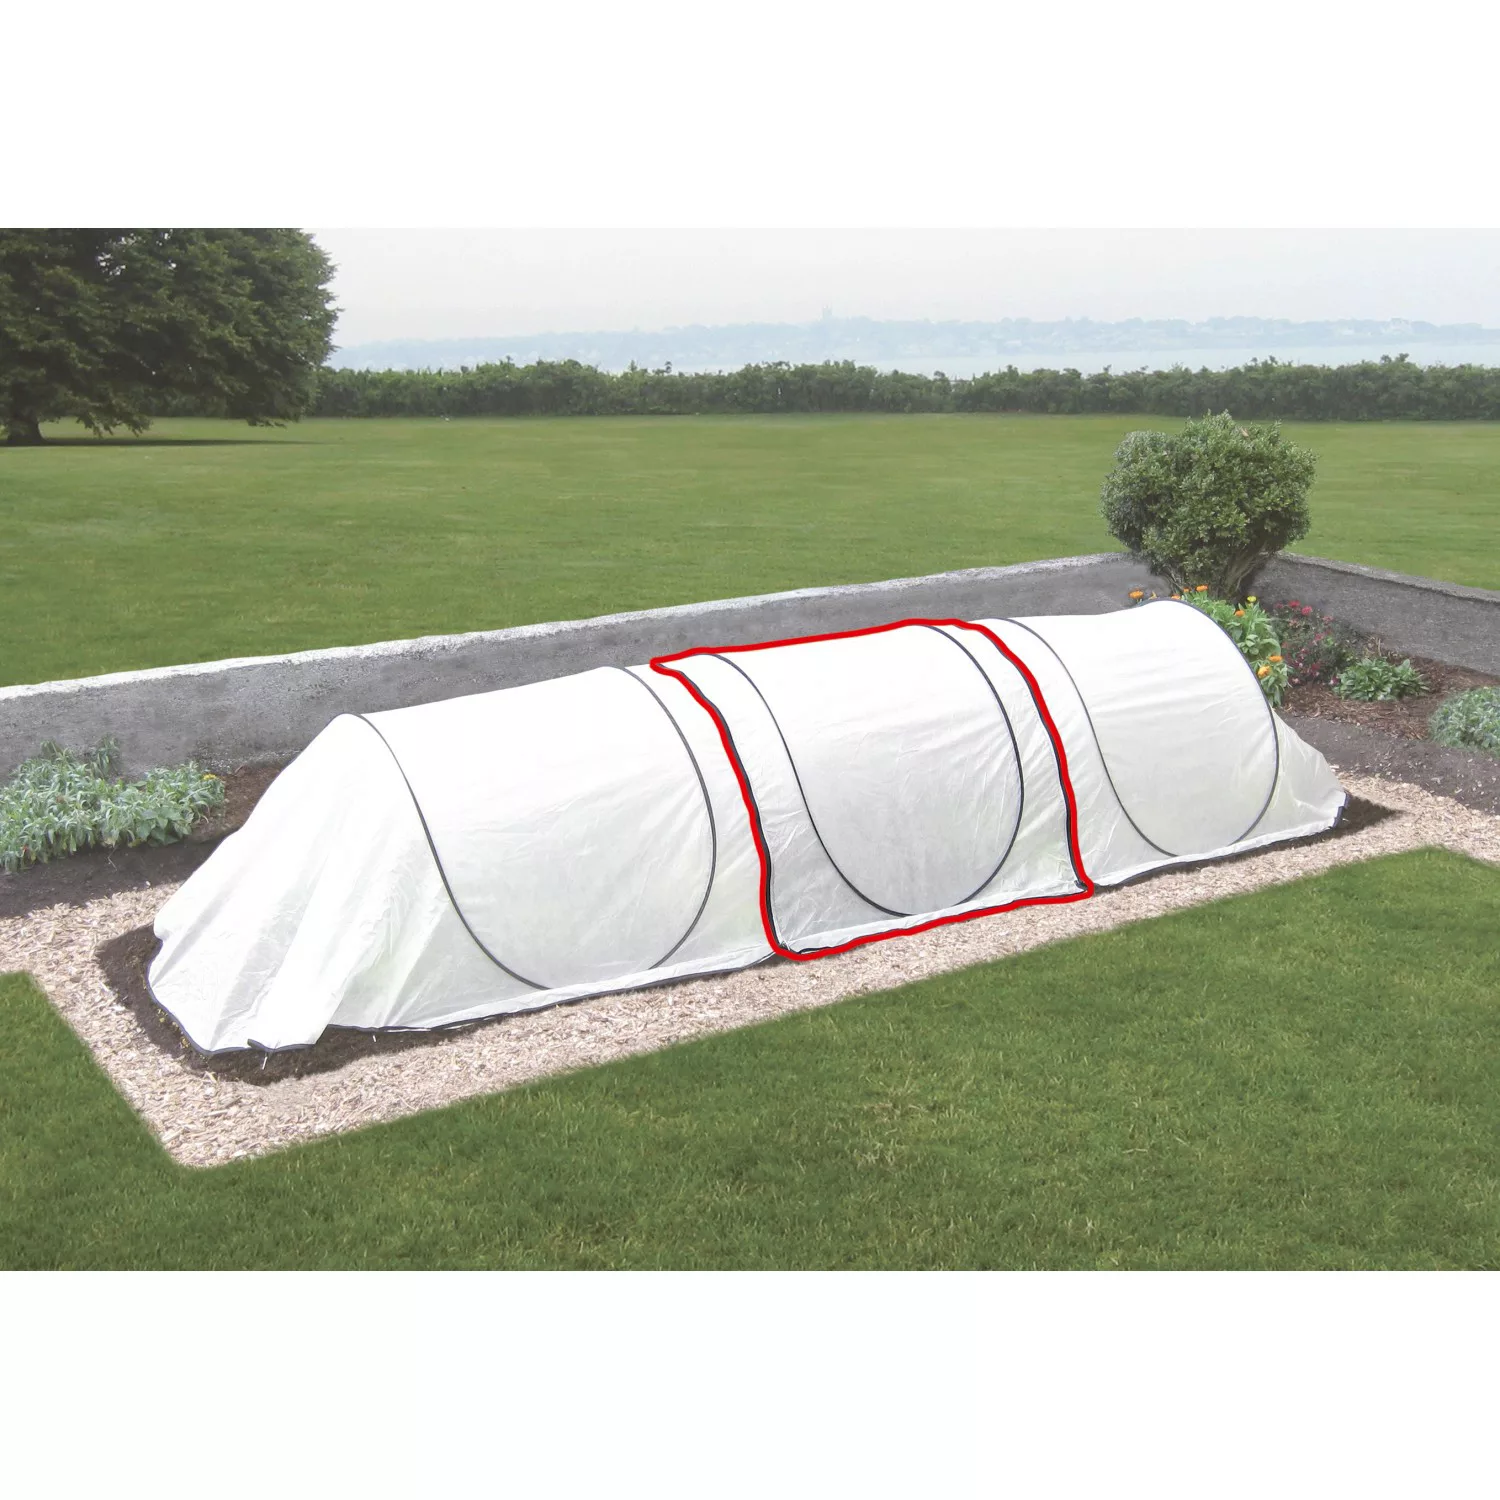 Gardenguard Kälteschutz-Verlängerung Pflanzenschutztunnel 110 cm günstig online kaufen